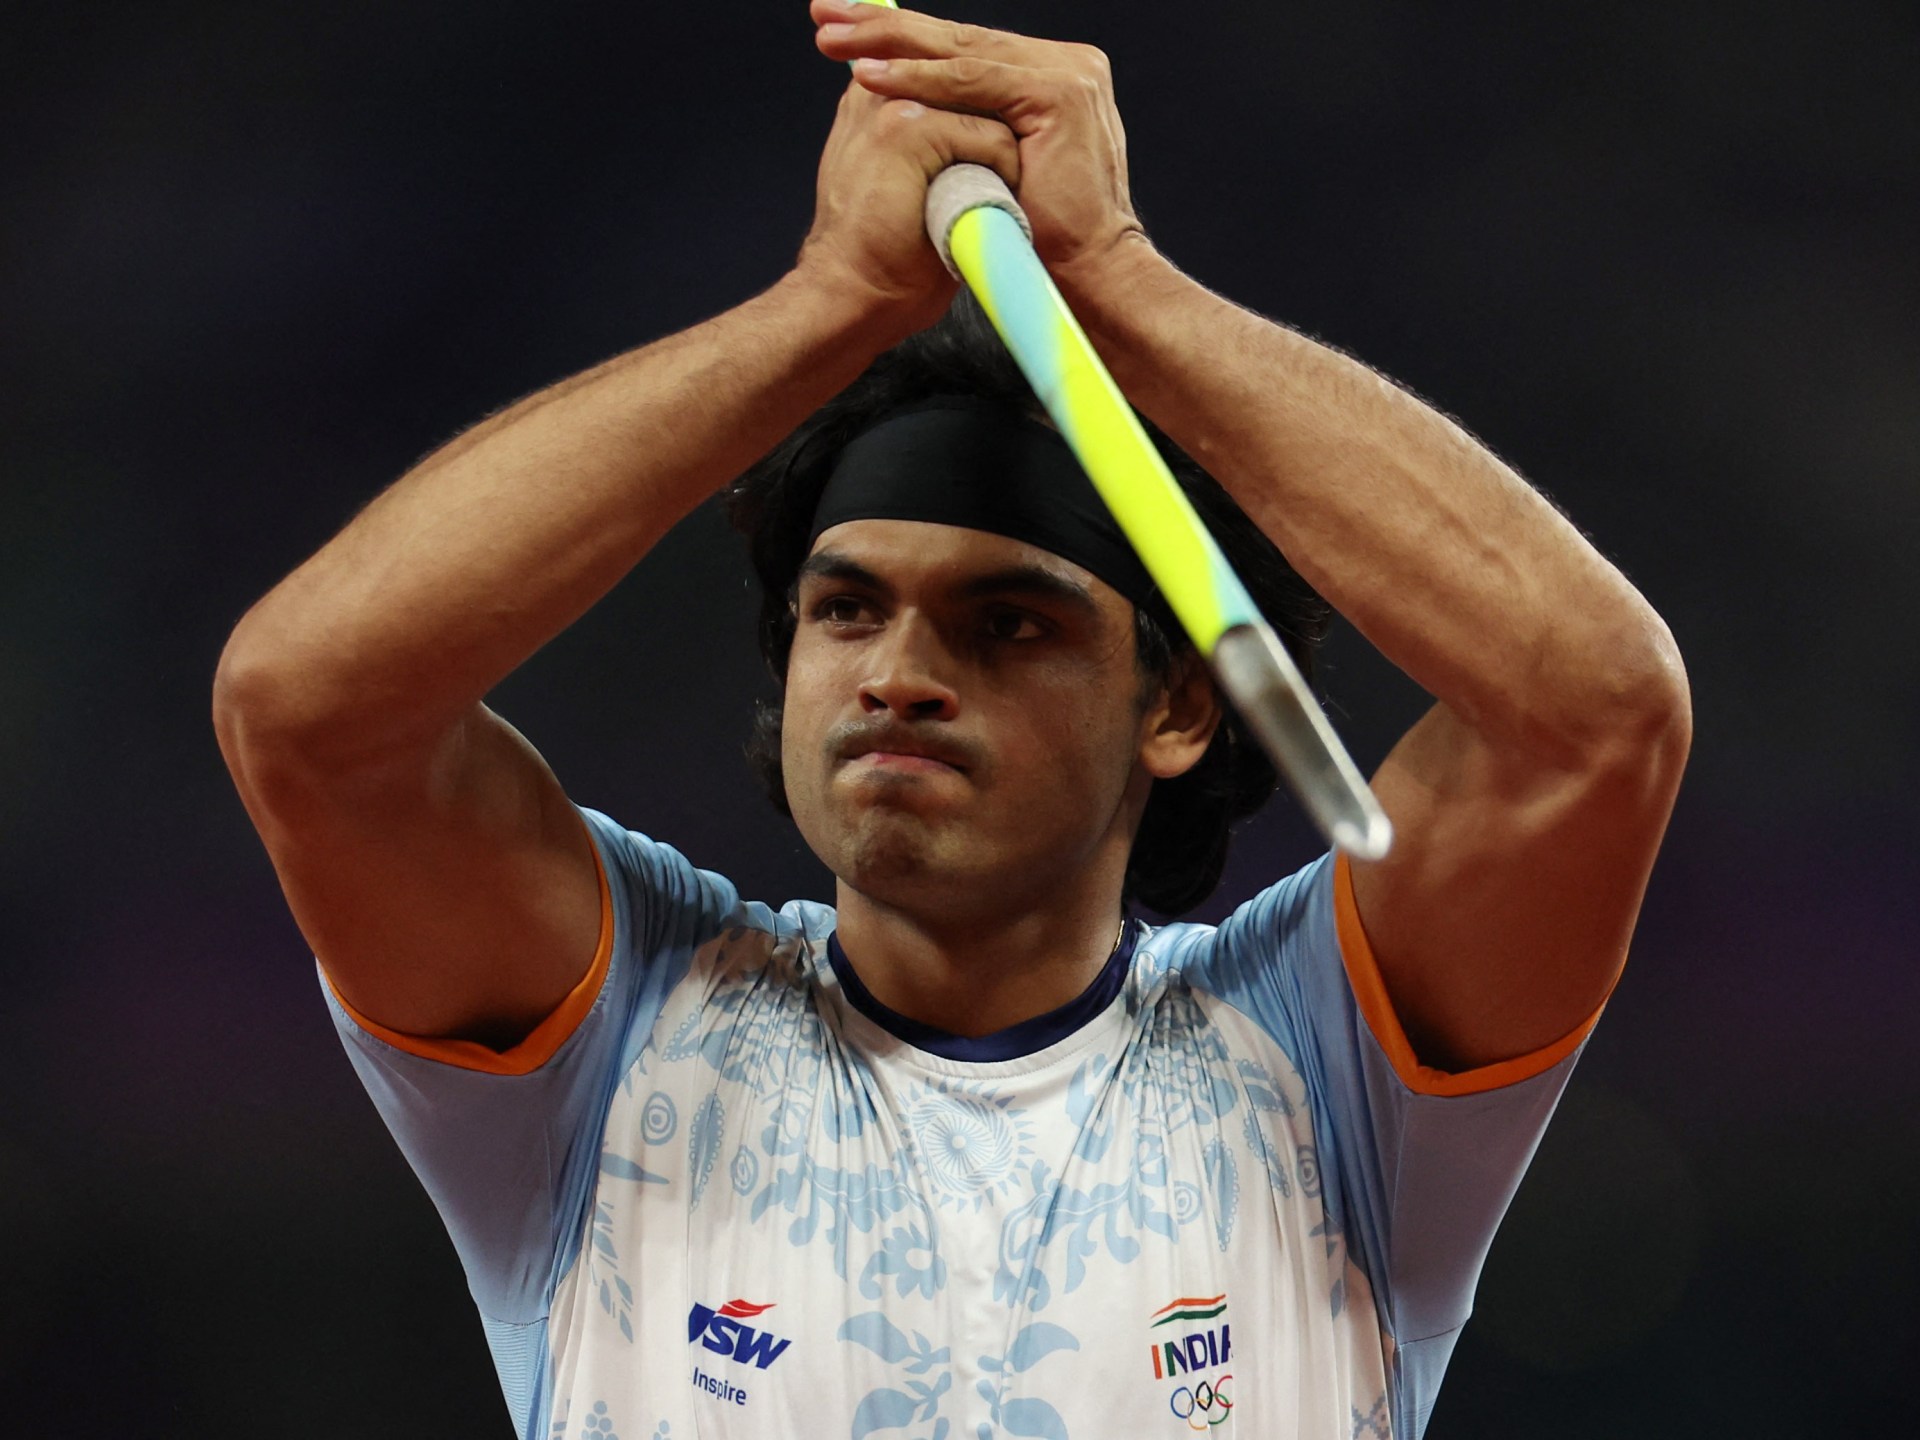 Indian javelin star Neeraj Chopra hungry for more Olympic glory in 2024 | Olympics #Indian #javelin #star #Neeraj #Chopra #hungry #Olympic #glory #Olympics